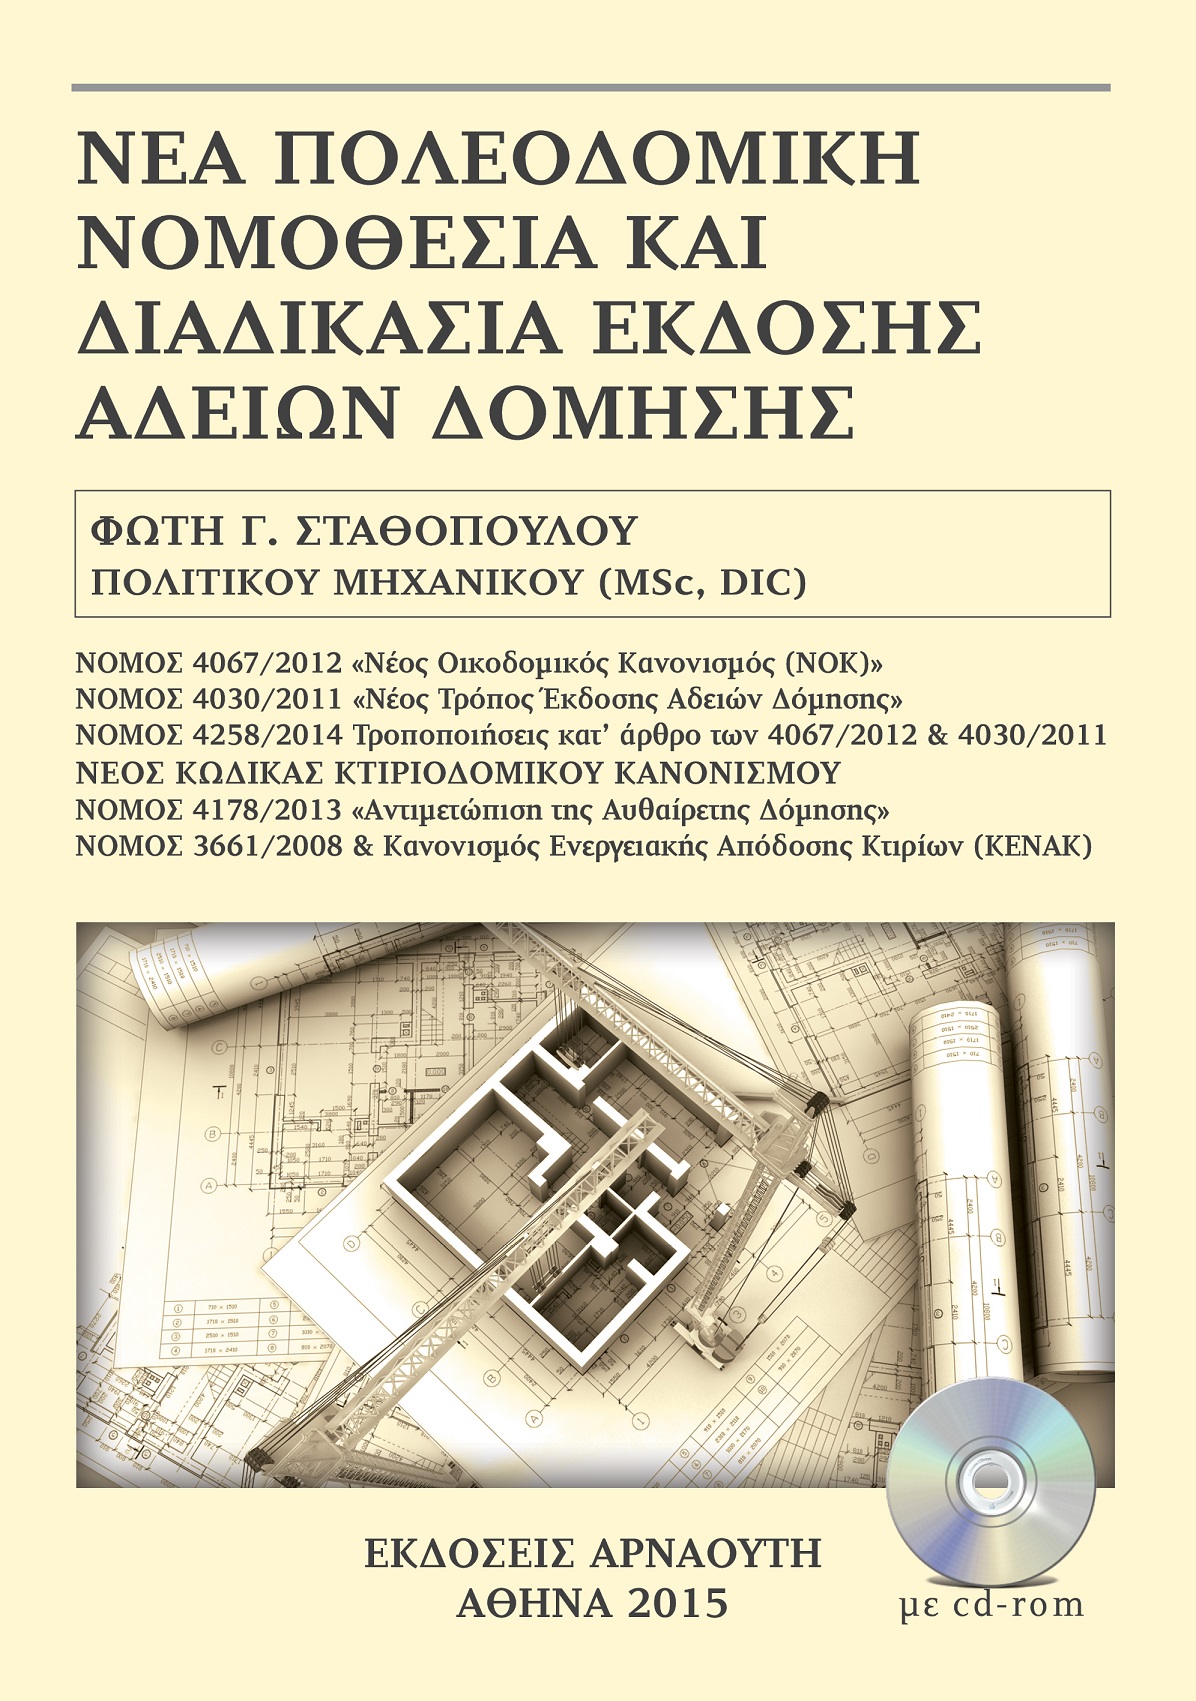 More information about "Κληρώσεις για τέσσερα (4) τεχνικά βιβλία"